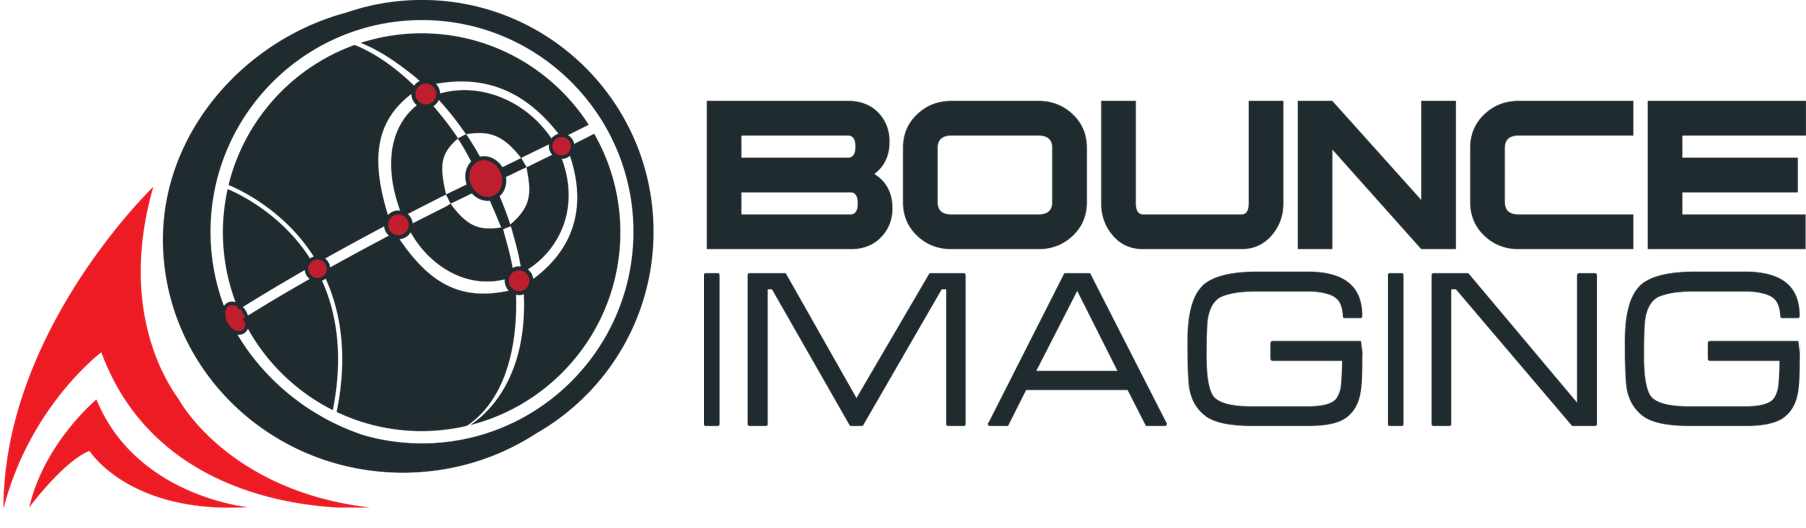 Bounce Imaging 